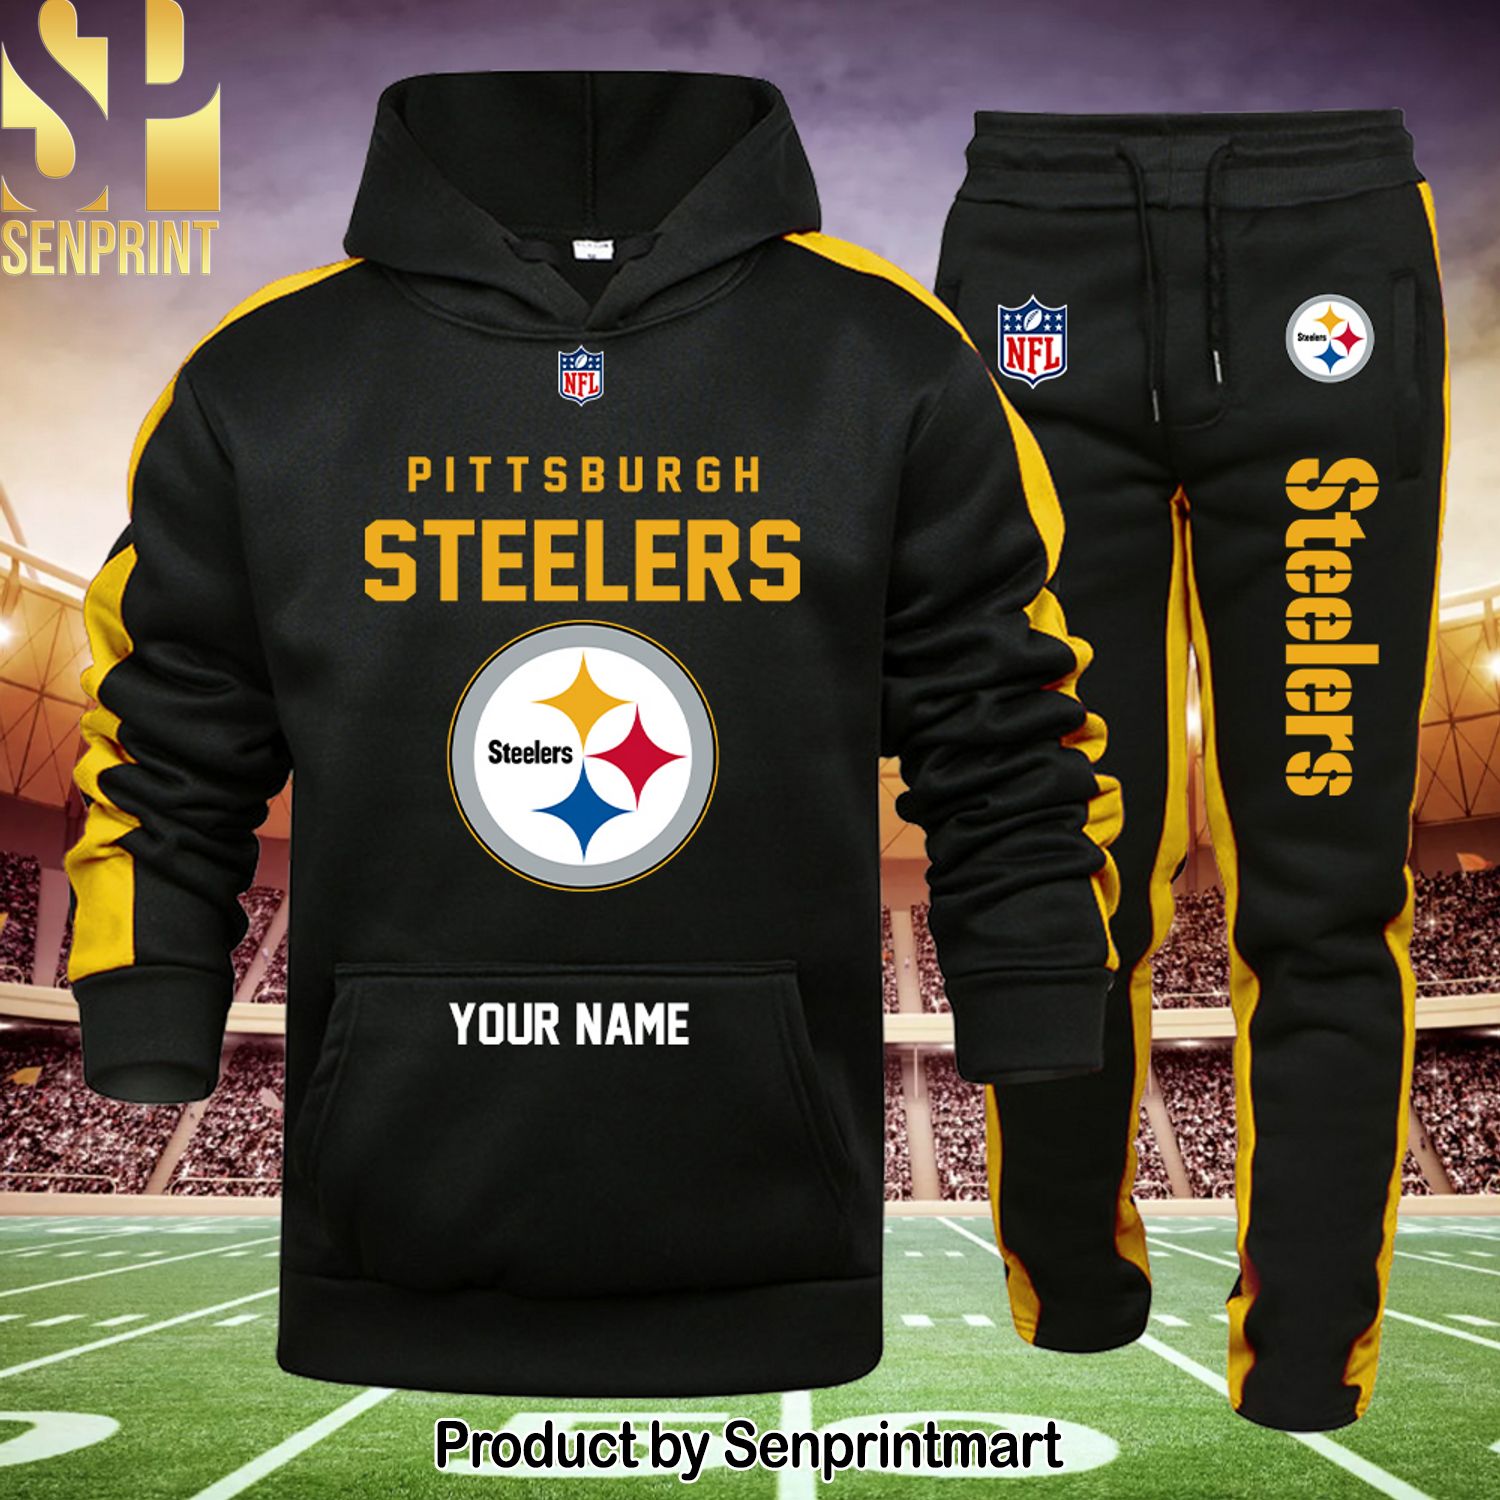 NFL Pittsburgh Steelers Unisex Full Printed Shirt and Sweatpants